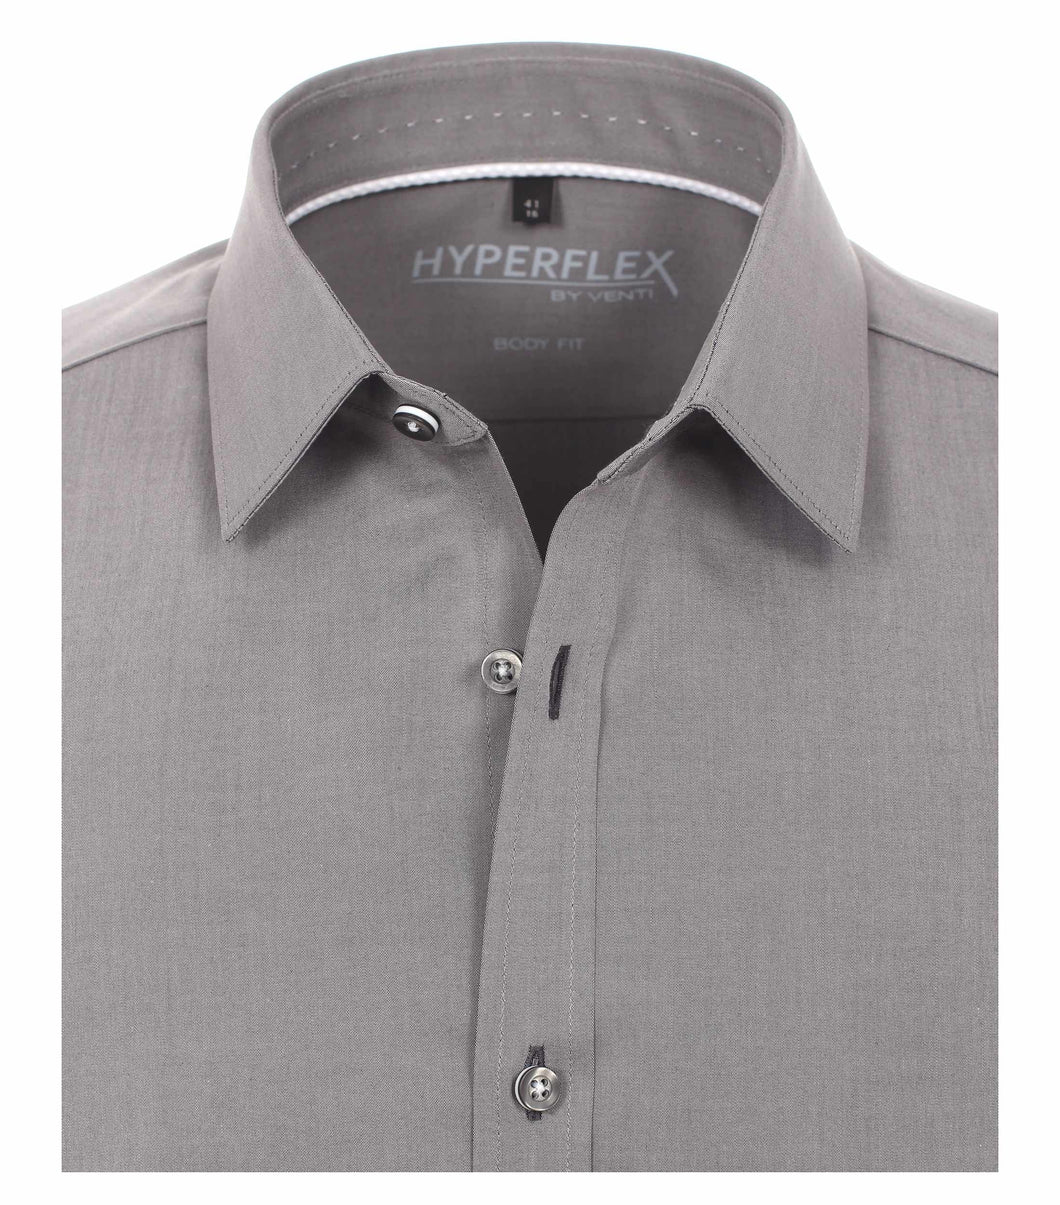 Venti Hyperflex kauluspaita harmaa